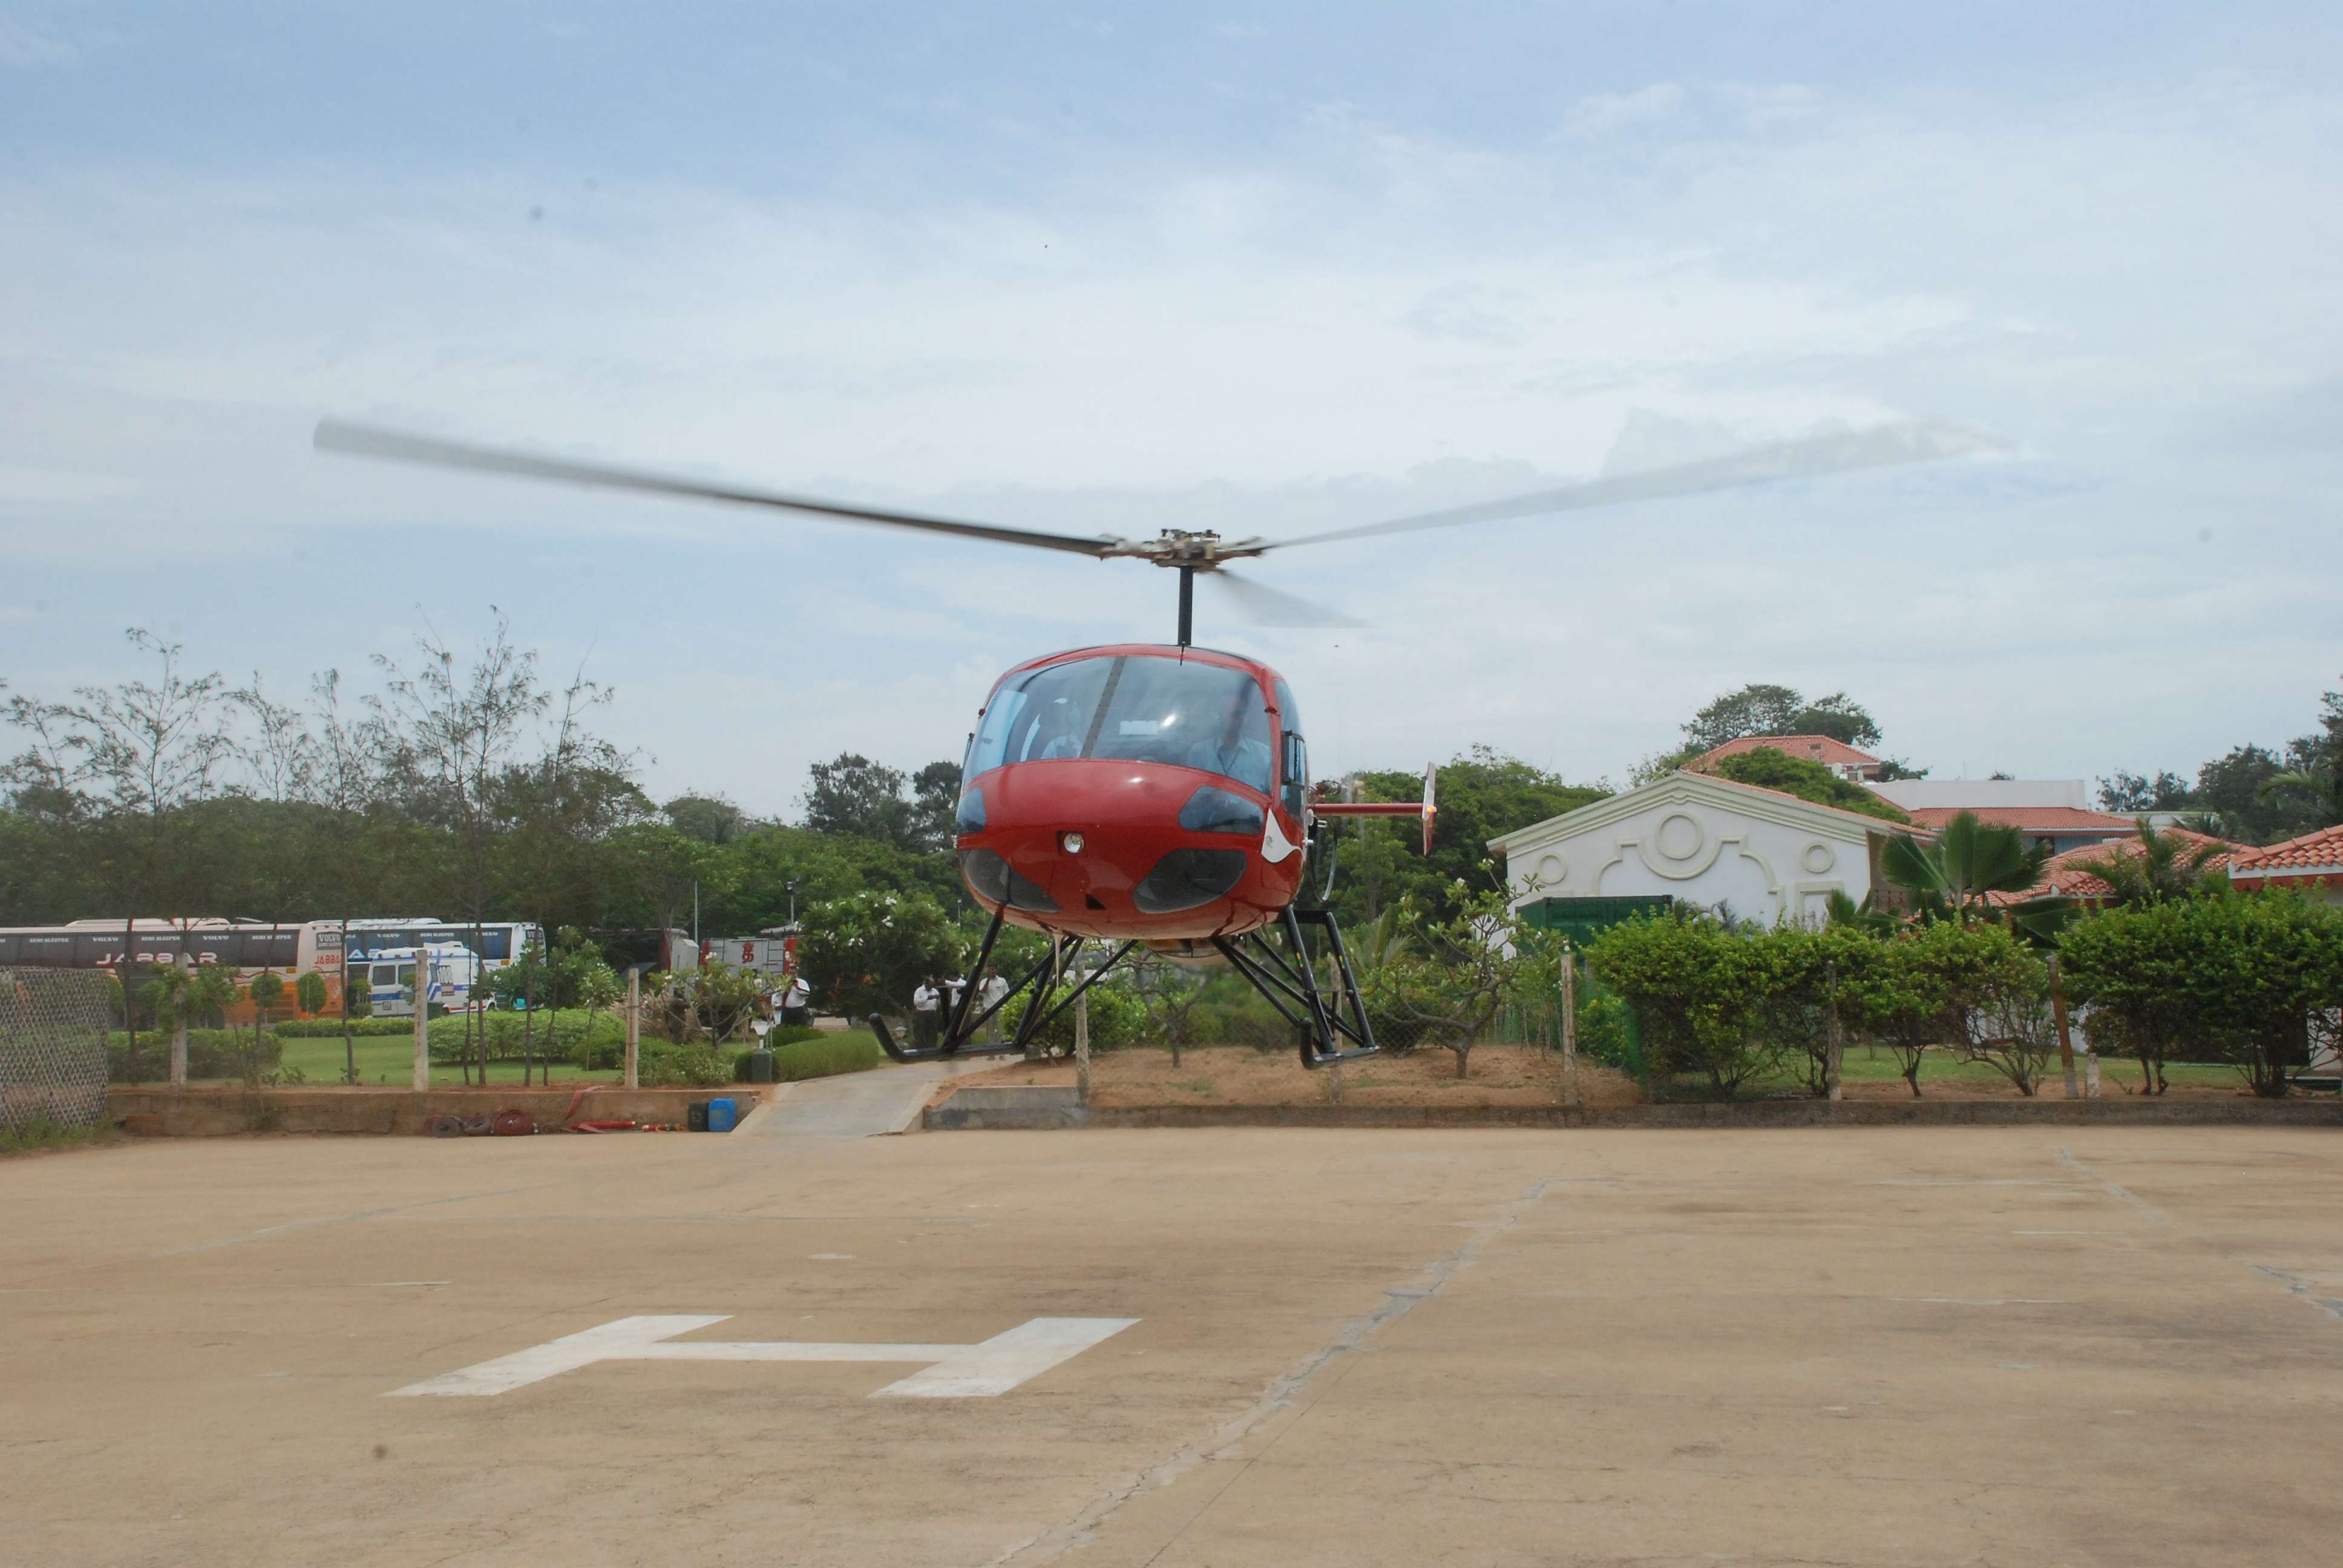 mumbai helicopter tour price